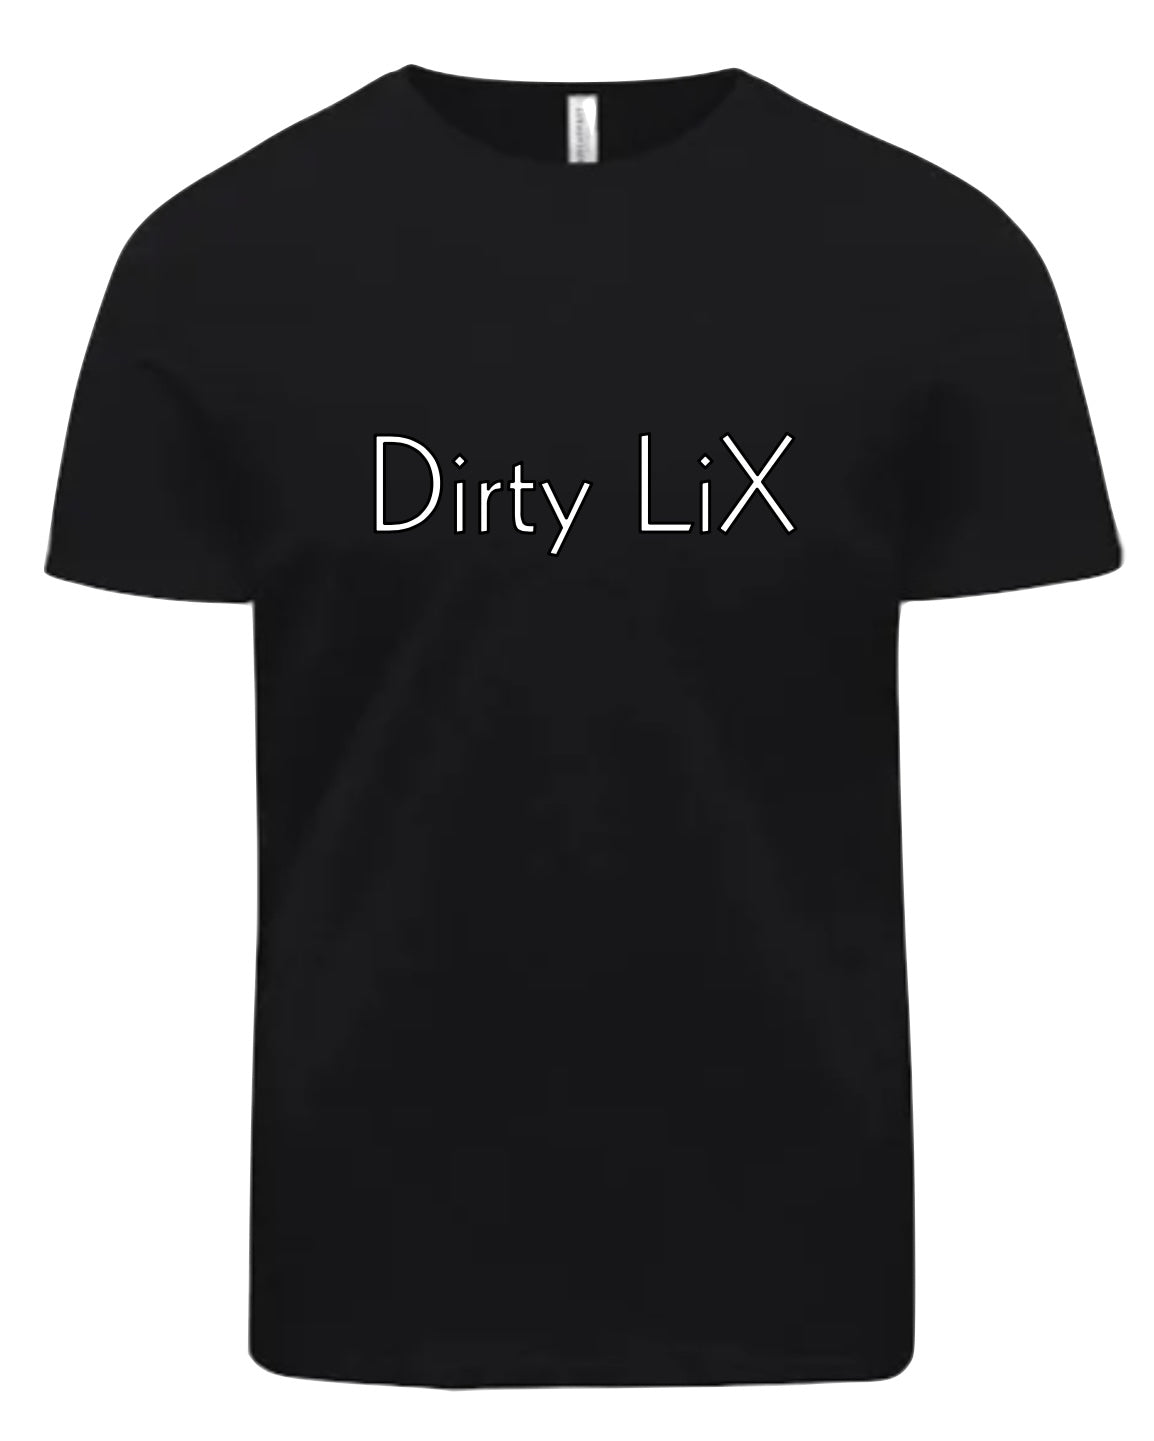 Dirty Lix T-shirt or Tank